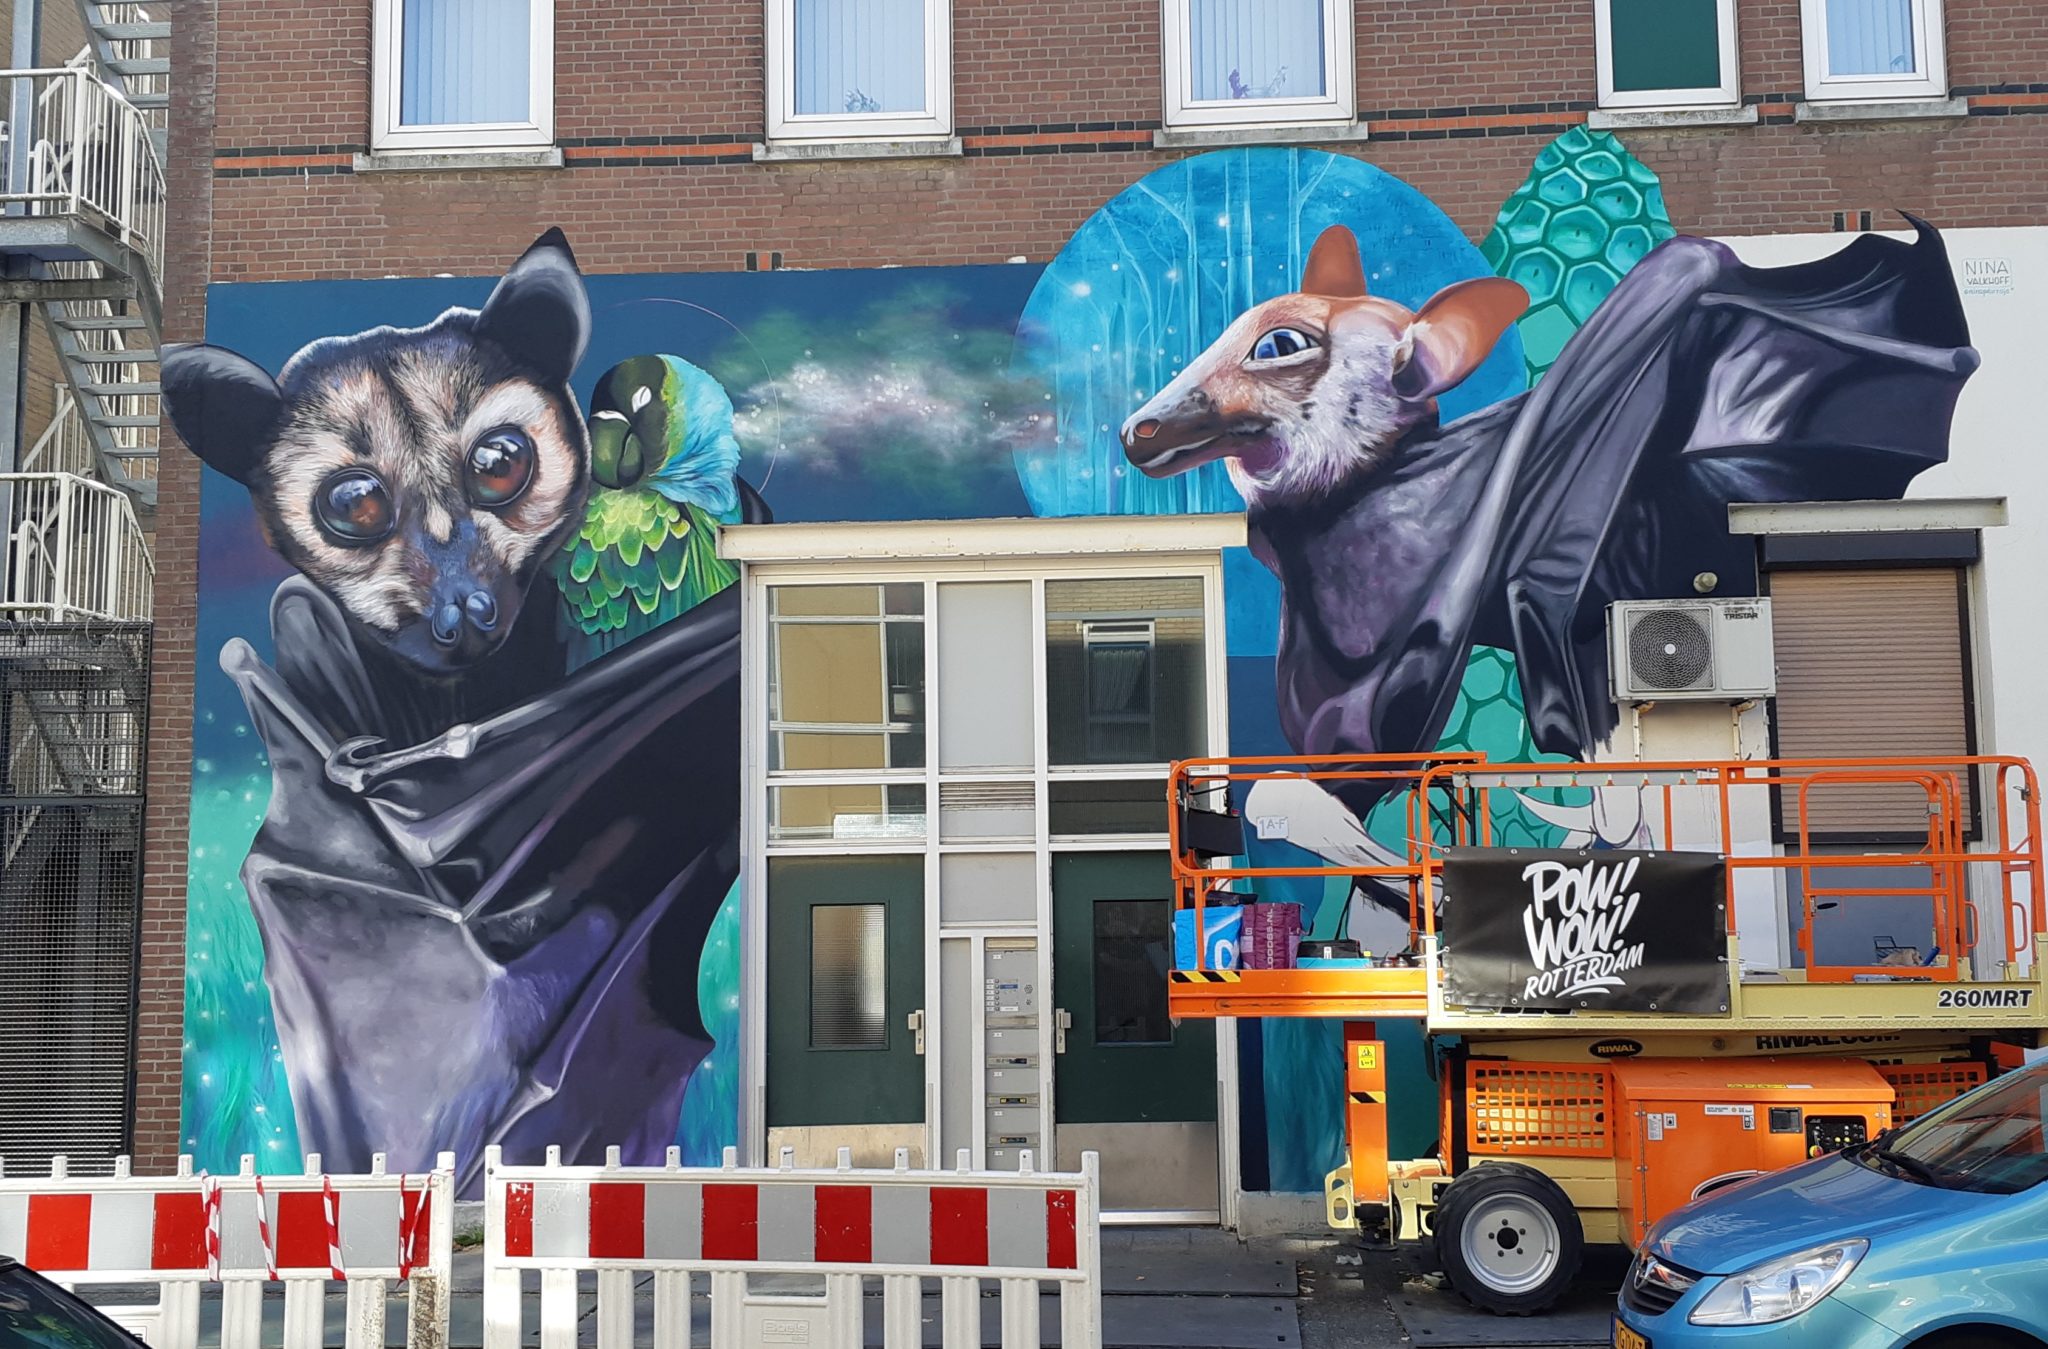 pow wow street art rotterdam